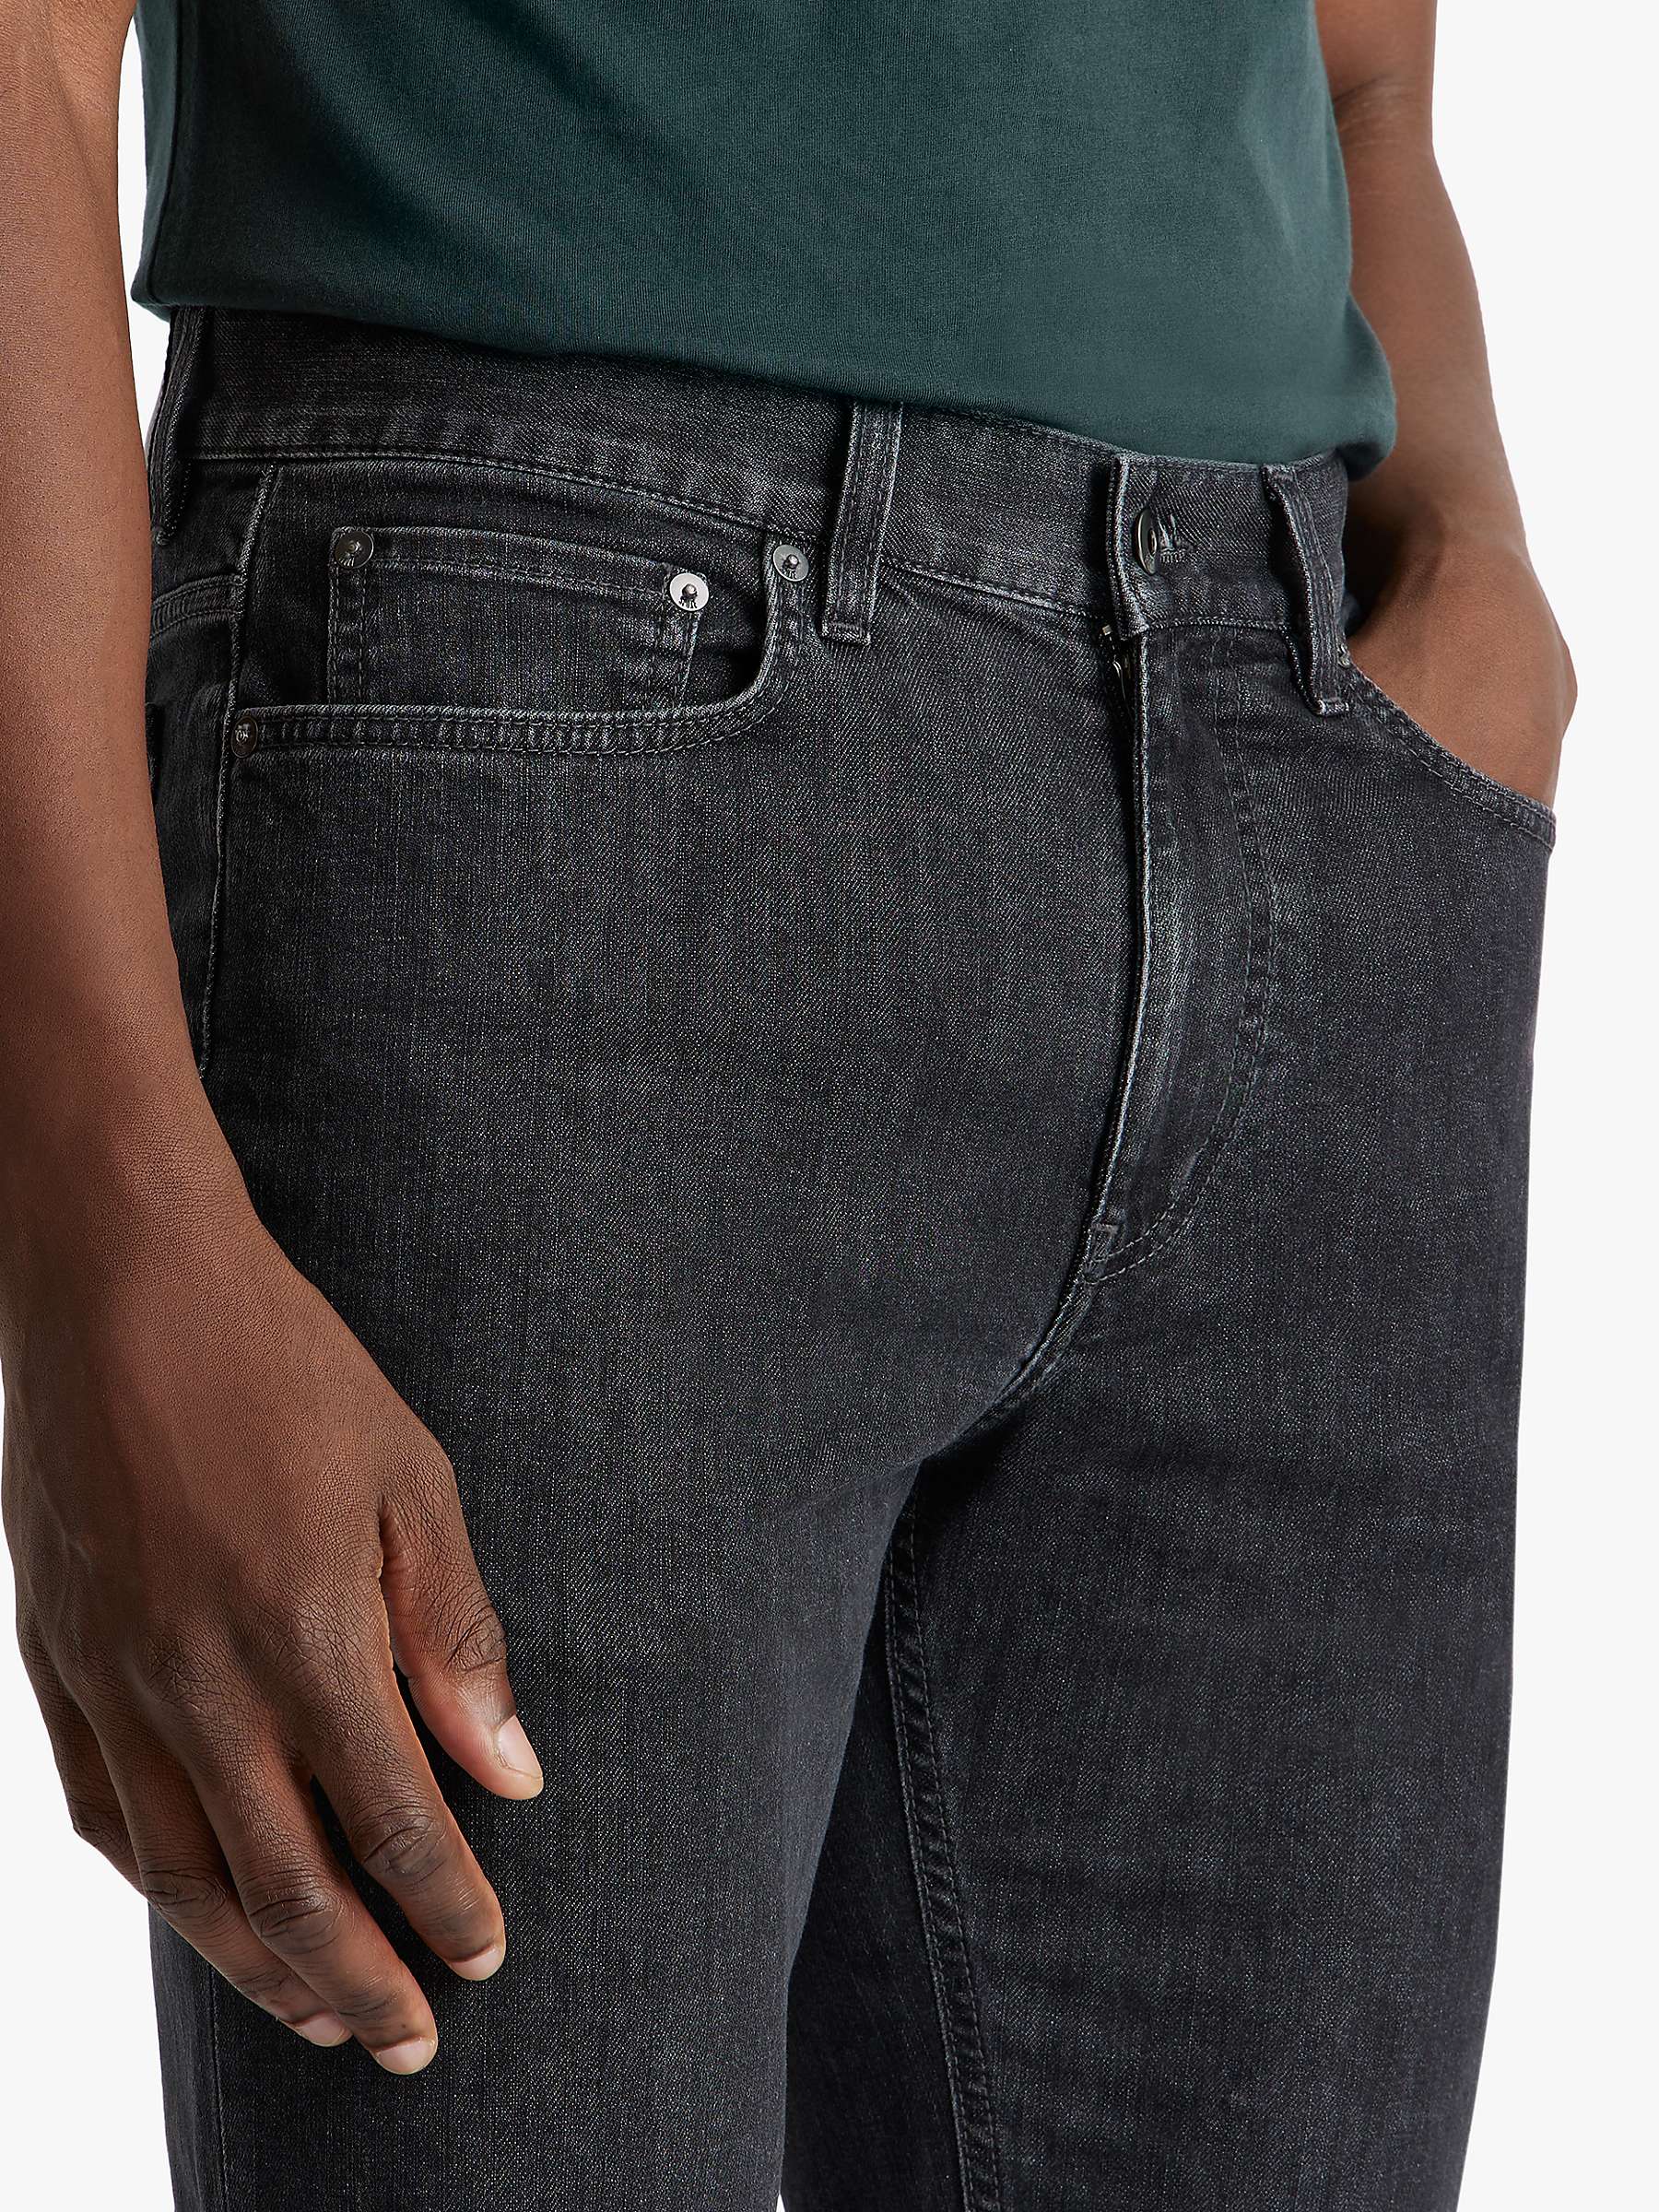 Buy SPOKE 12oz Denim Regular Thigh Jeans Online at johnlewis.com